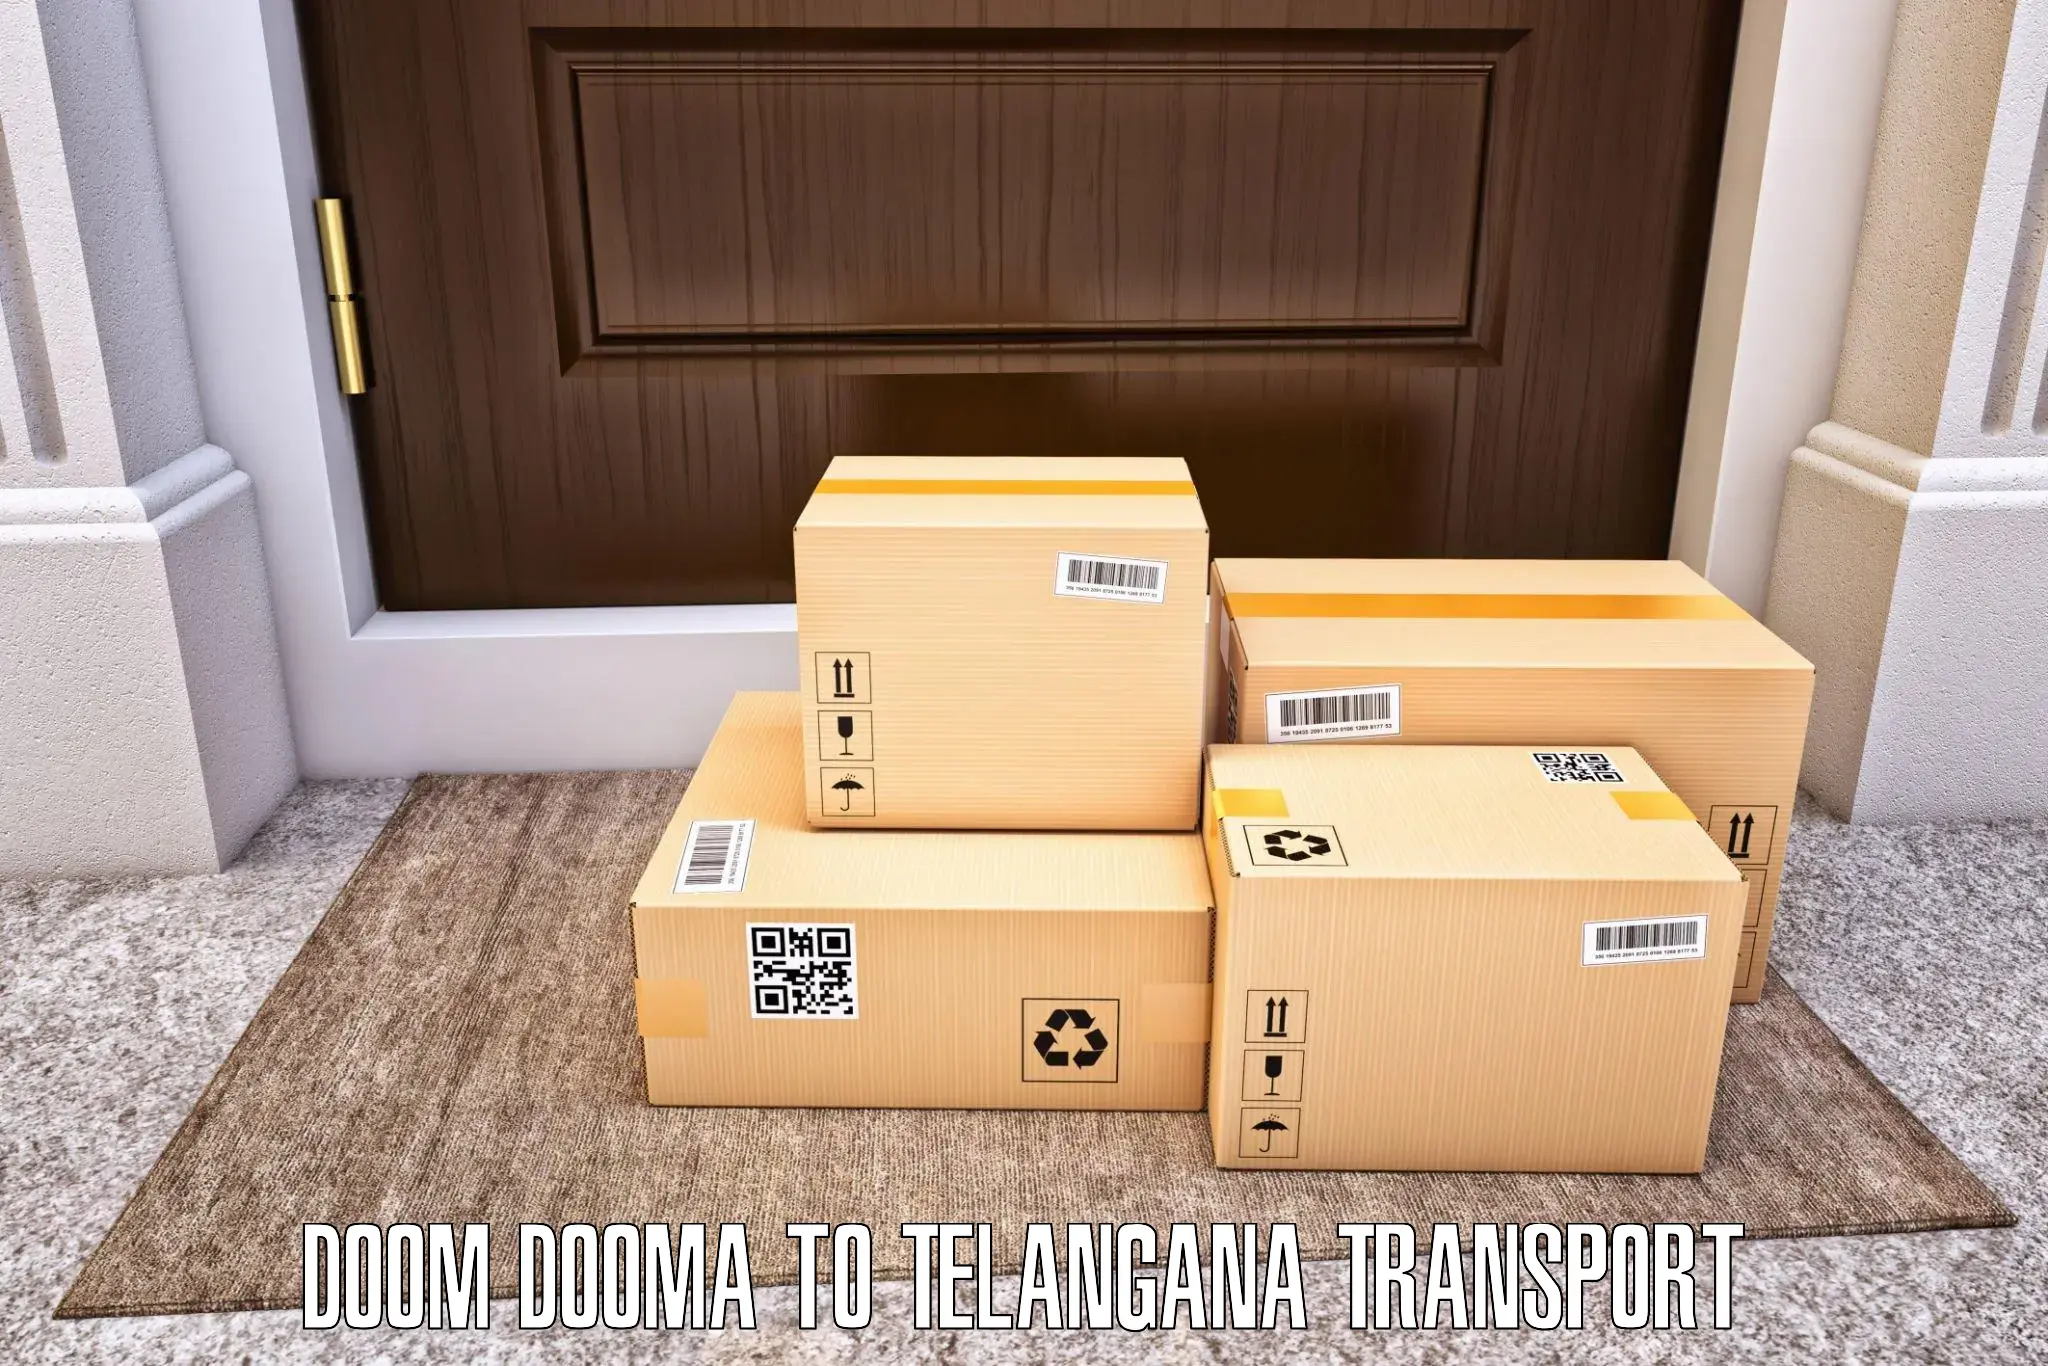 Transport services Doom Dooma to Amangal